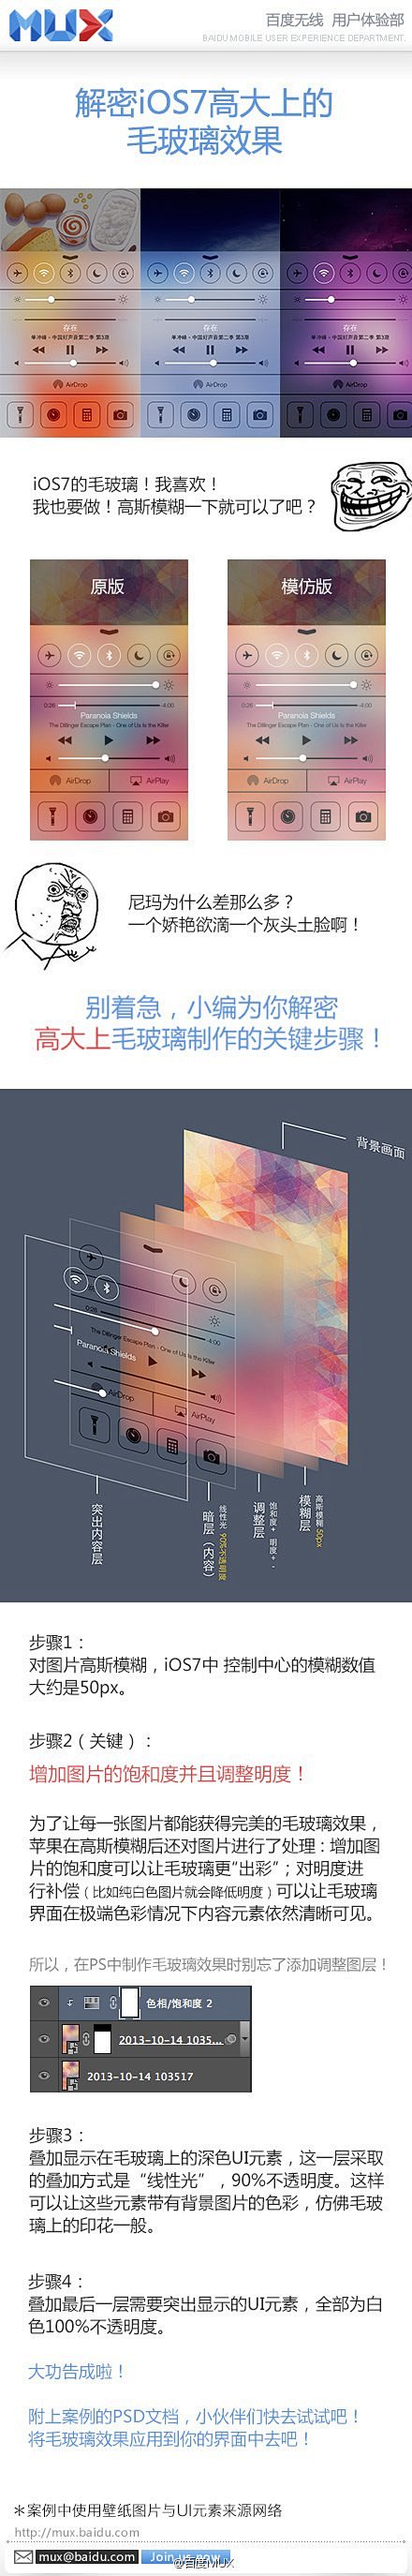 iOS7毛玻璃教程